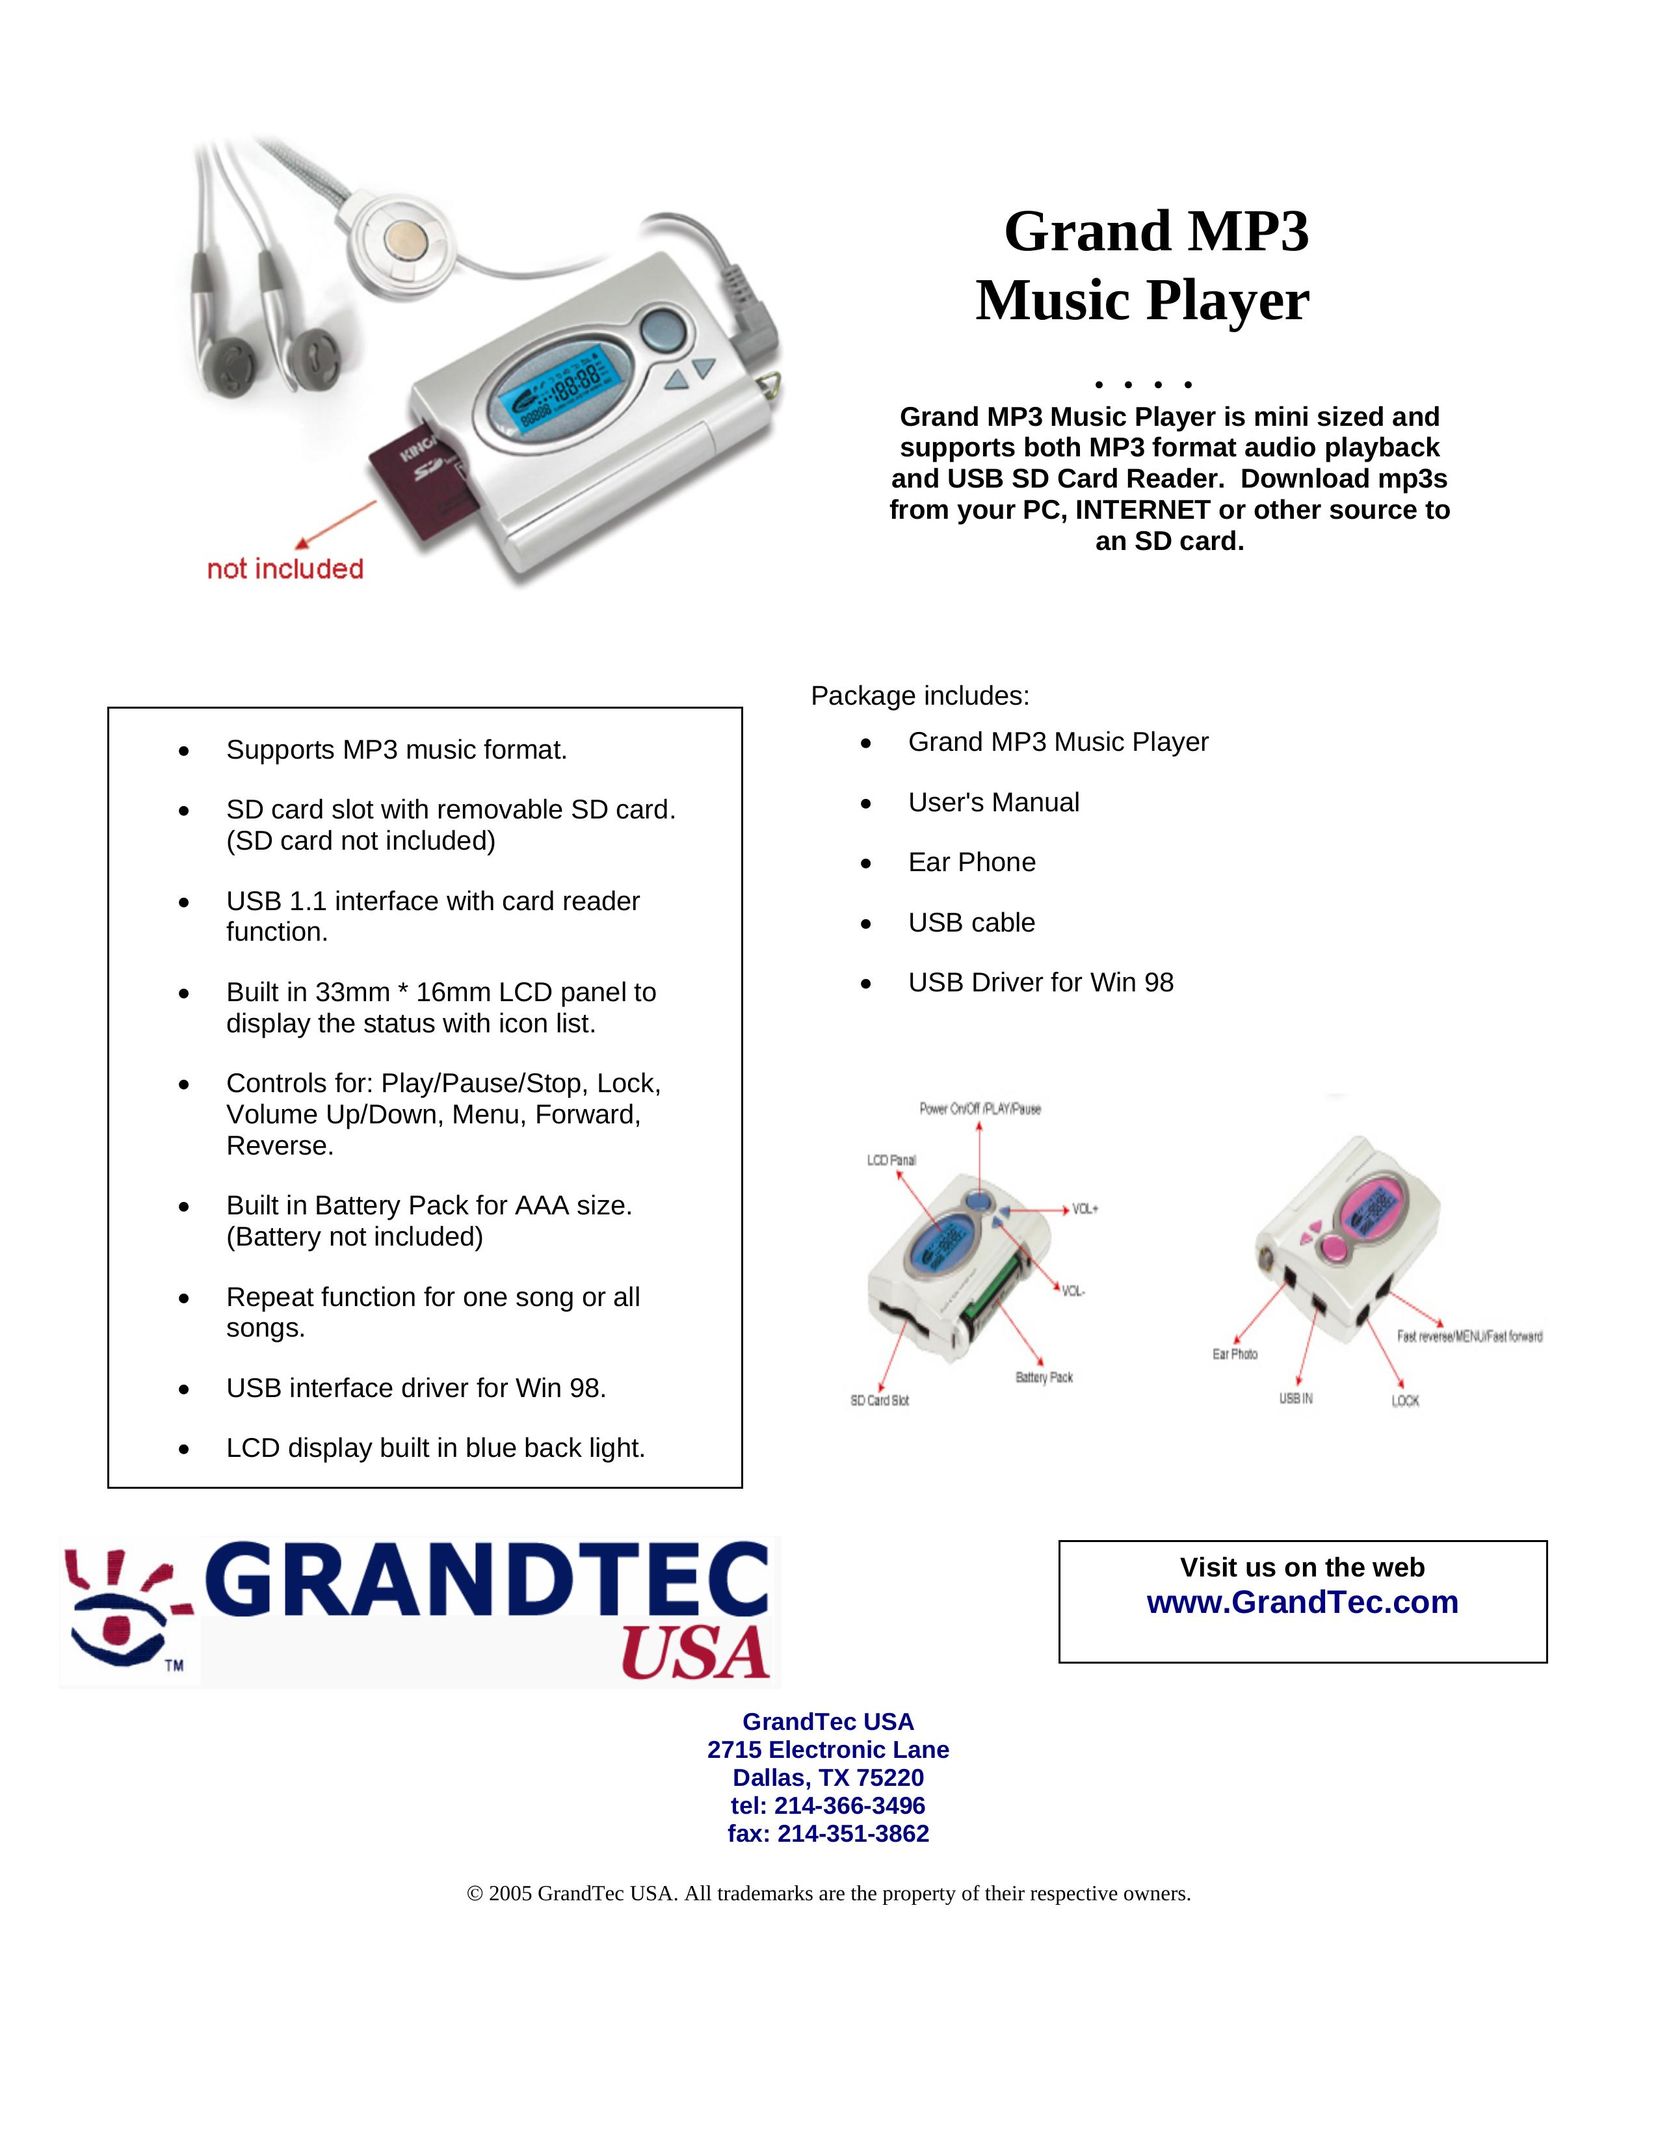 GrandTec Grand MP3 Music Player MP3 Player User Manual